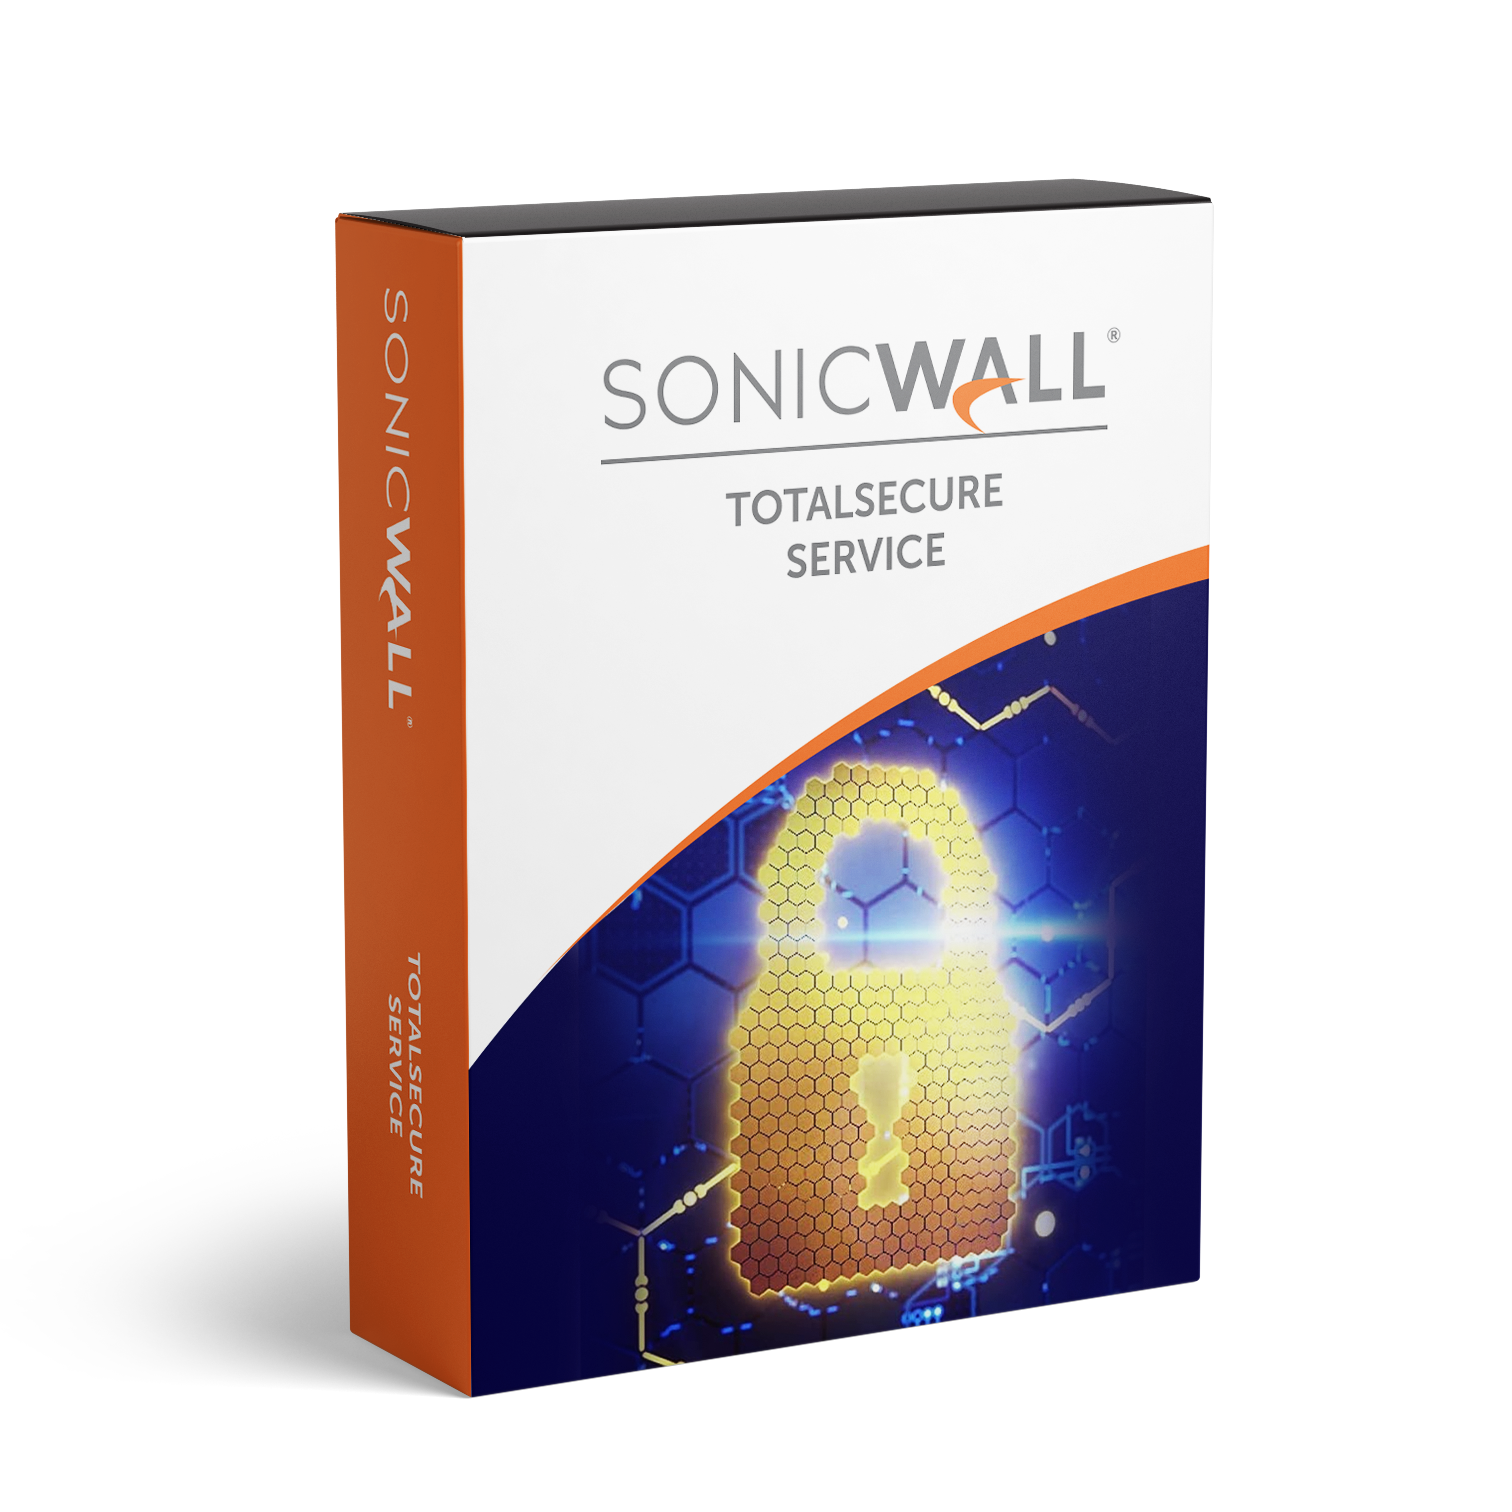 TotalSecure Service